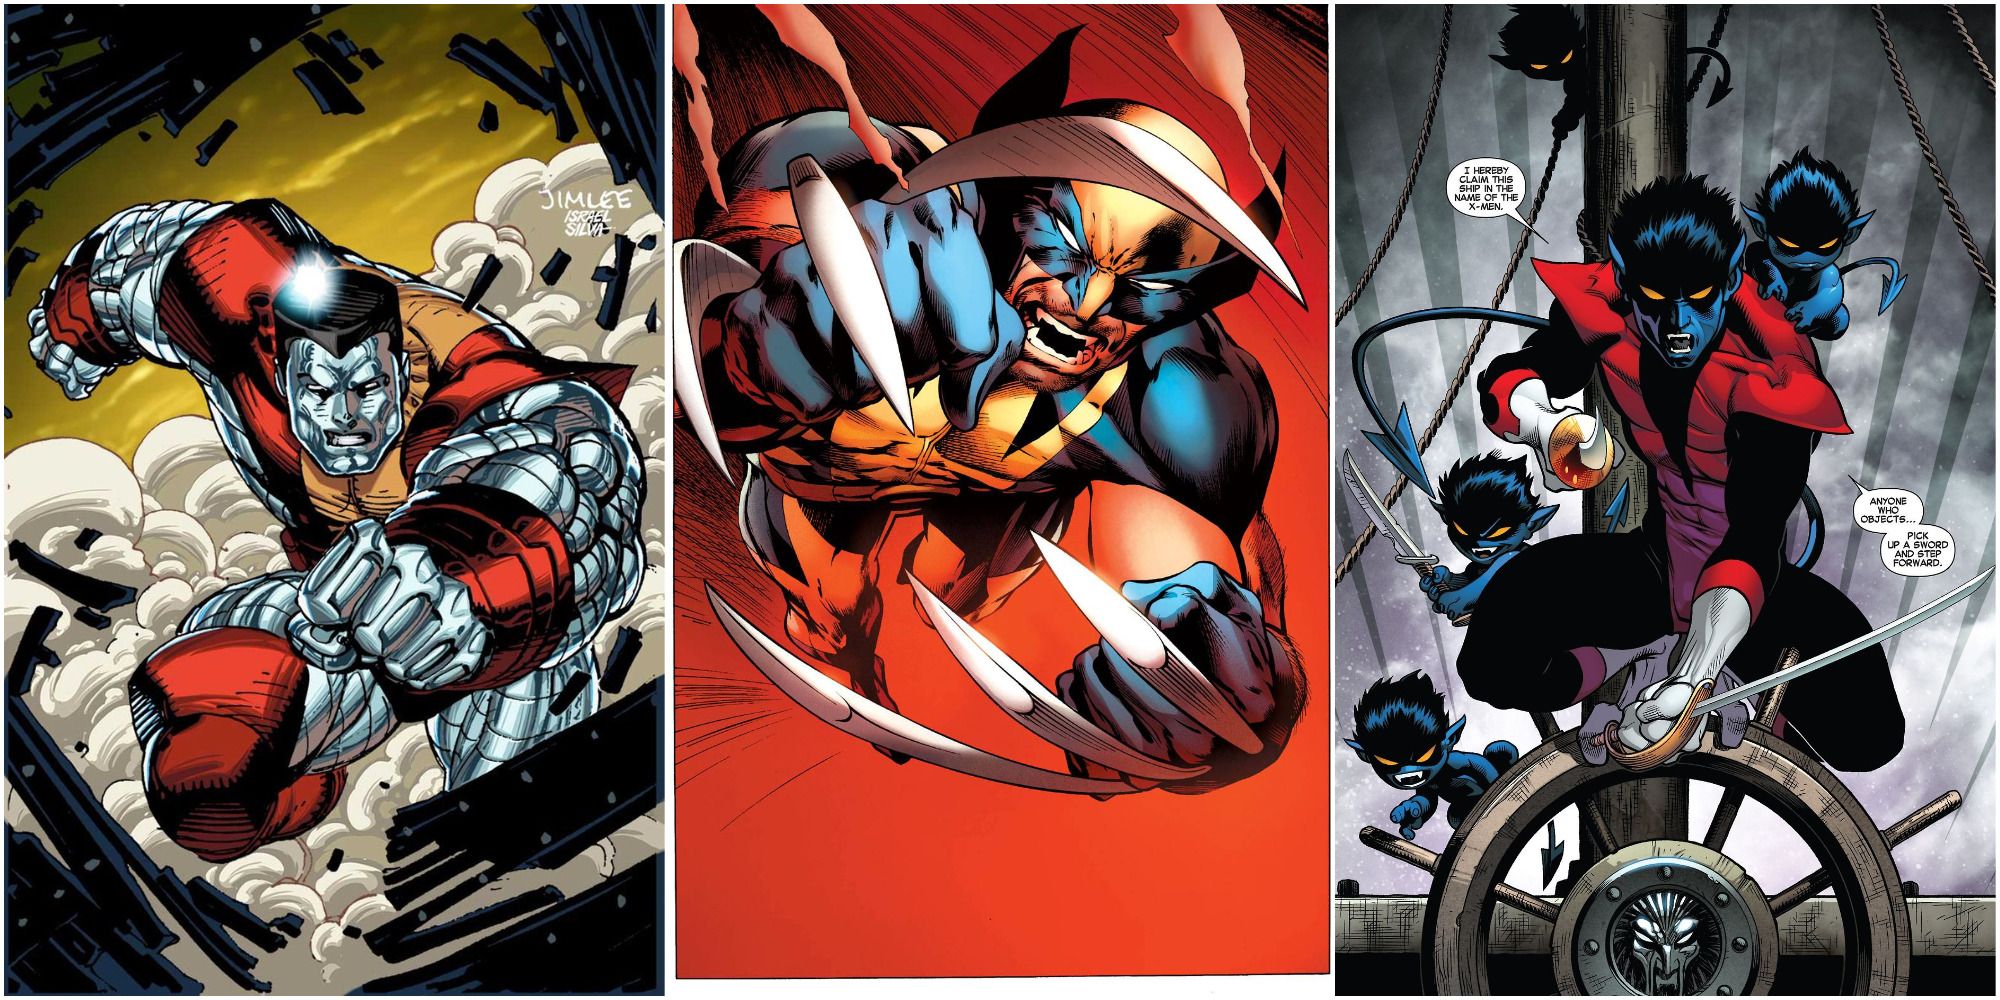 Colossus, Wolverine, and Nightcrawler